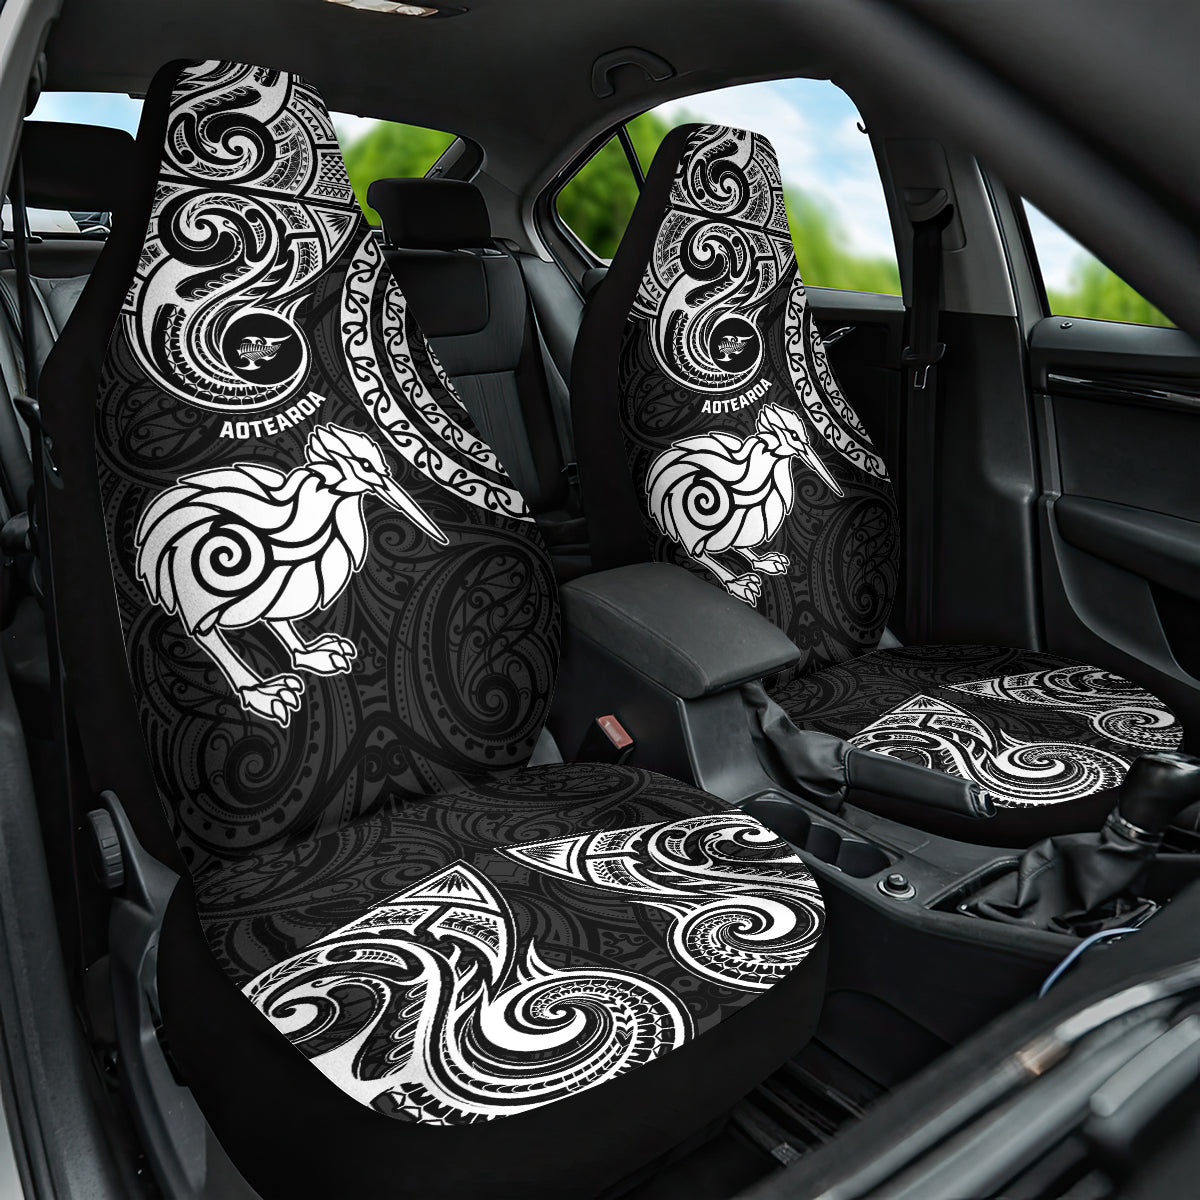 New Zealand Car Seat Cover Stylized Kiwi Bird Tattoo Mix Koru Circle and Maori Ethnic Vibe LT03 One Size Black - Polynesian Pride